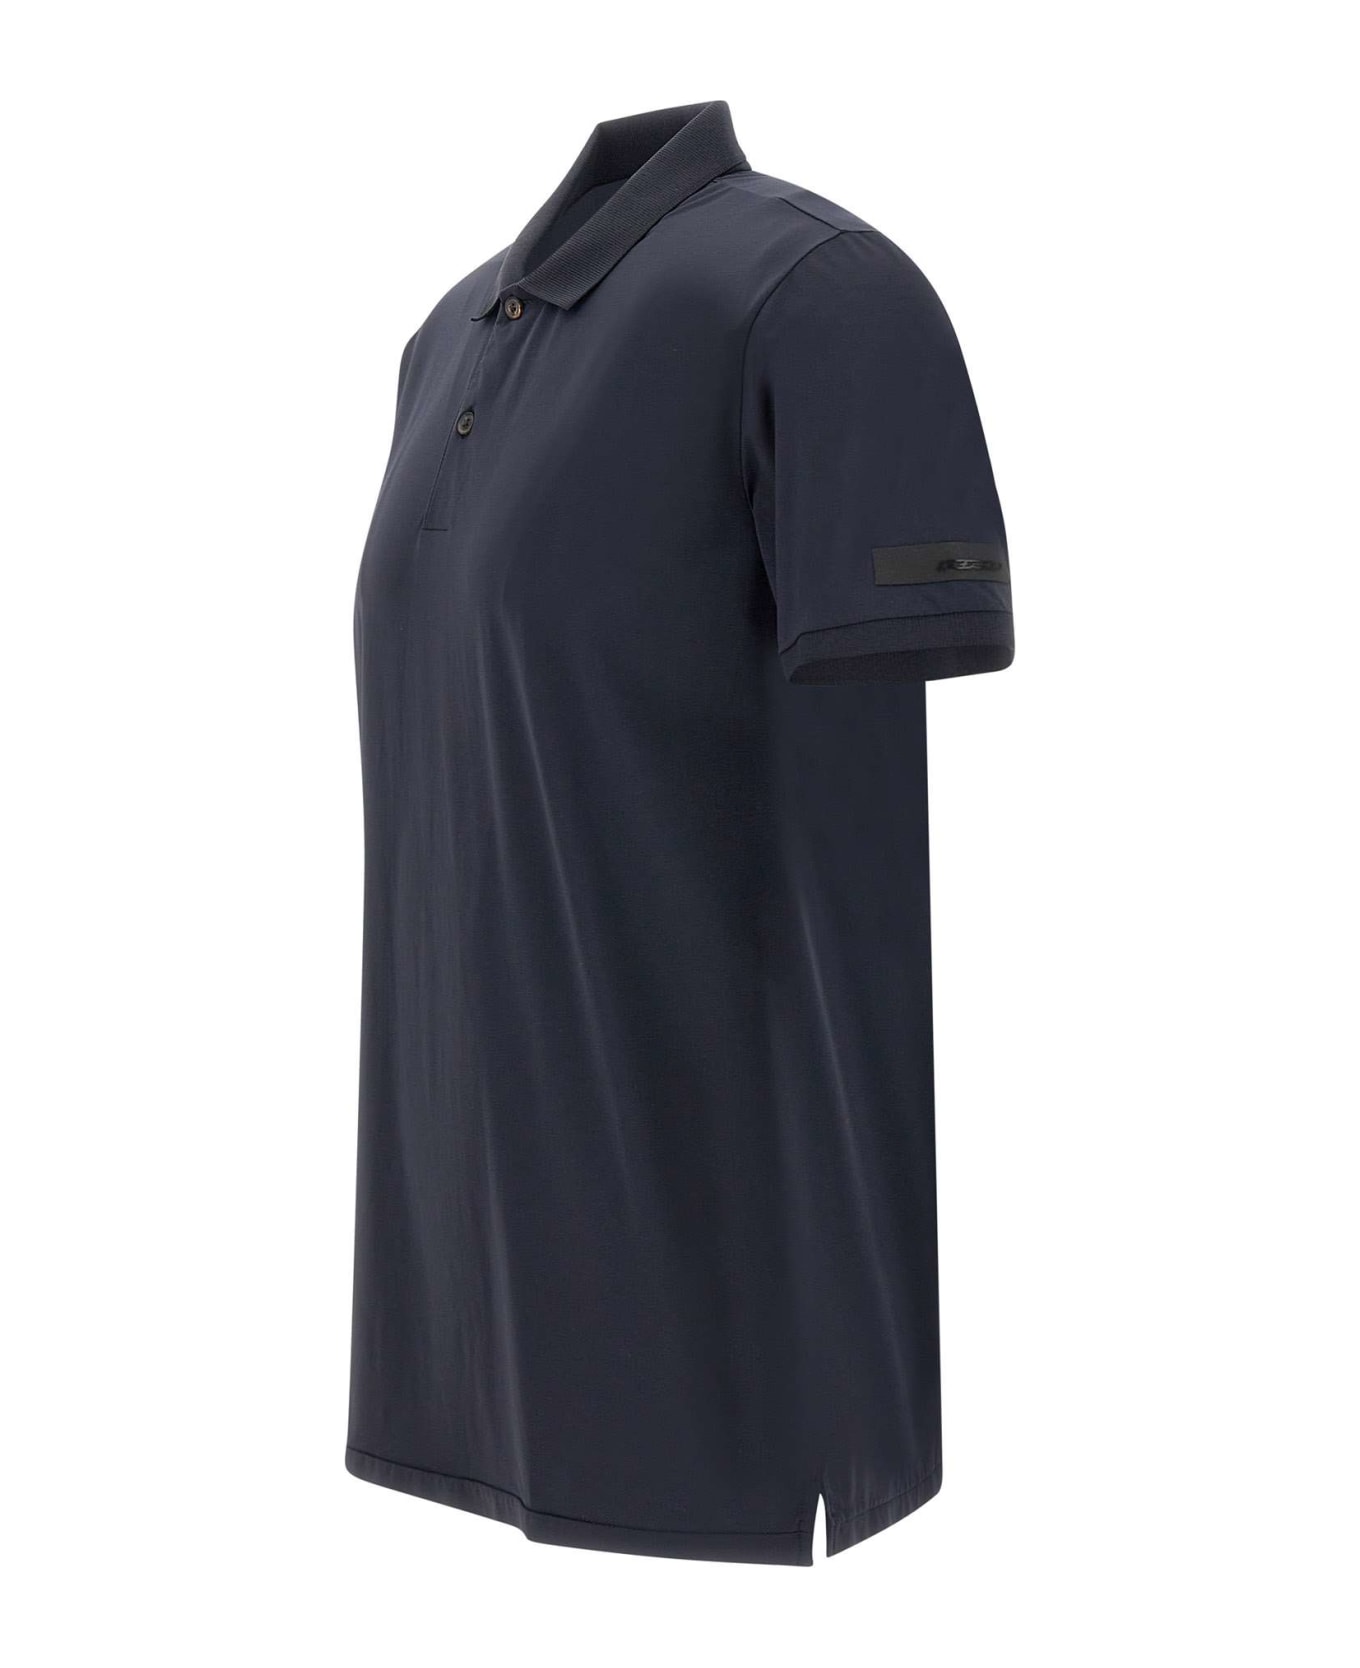 RRD - Roberto Ricci Design 'gdy' Cotton Oxford Polo Shirt - Blue Black